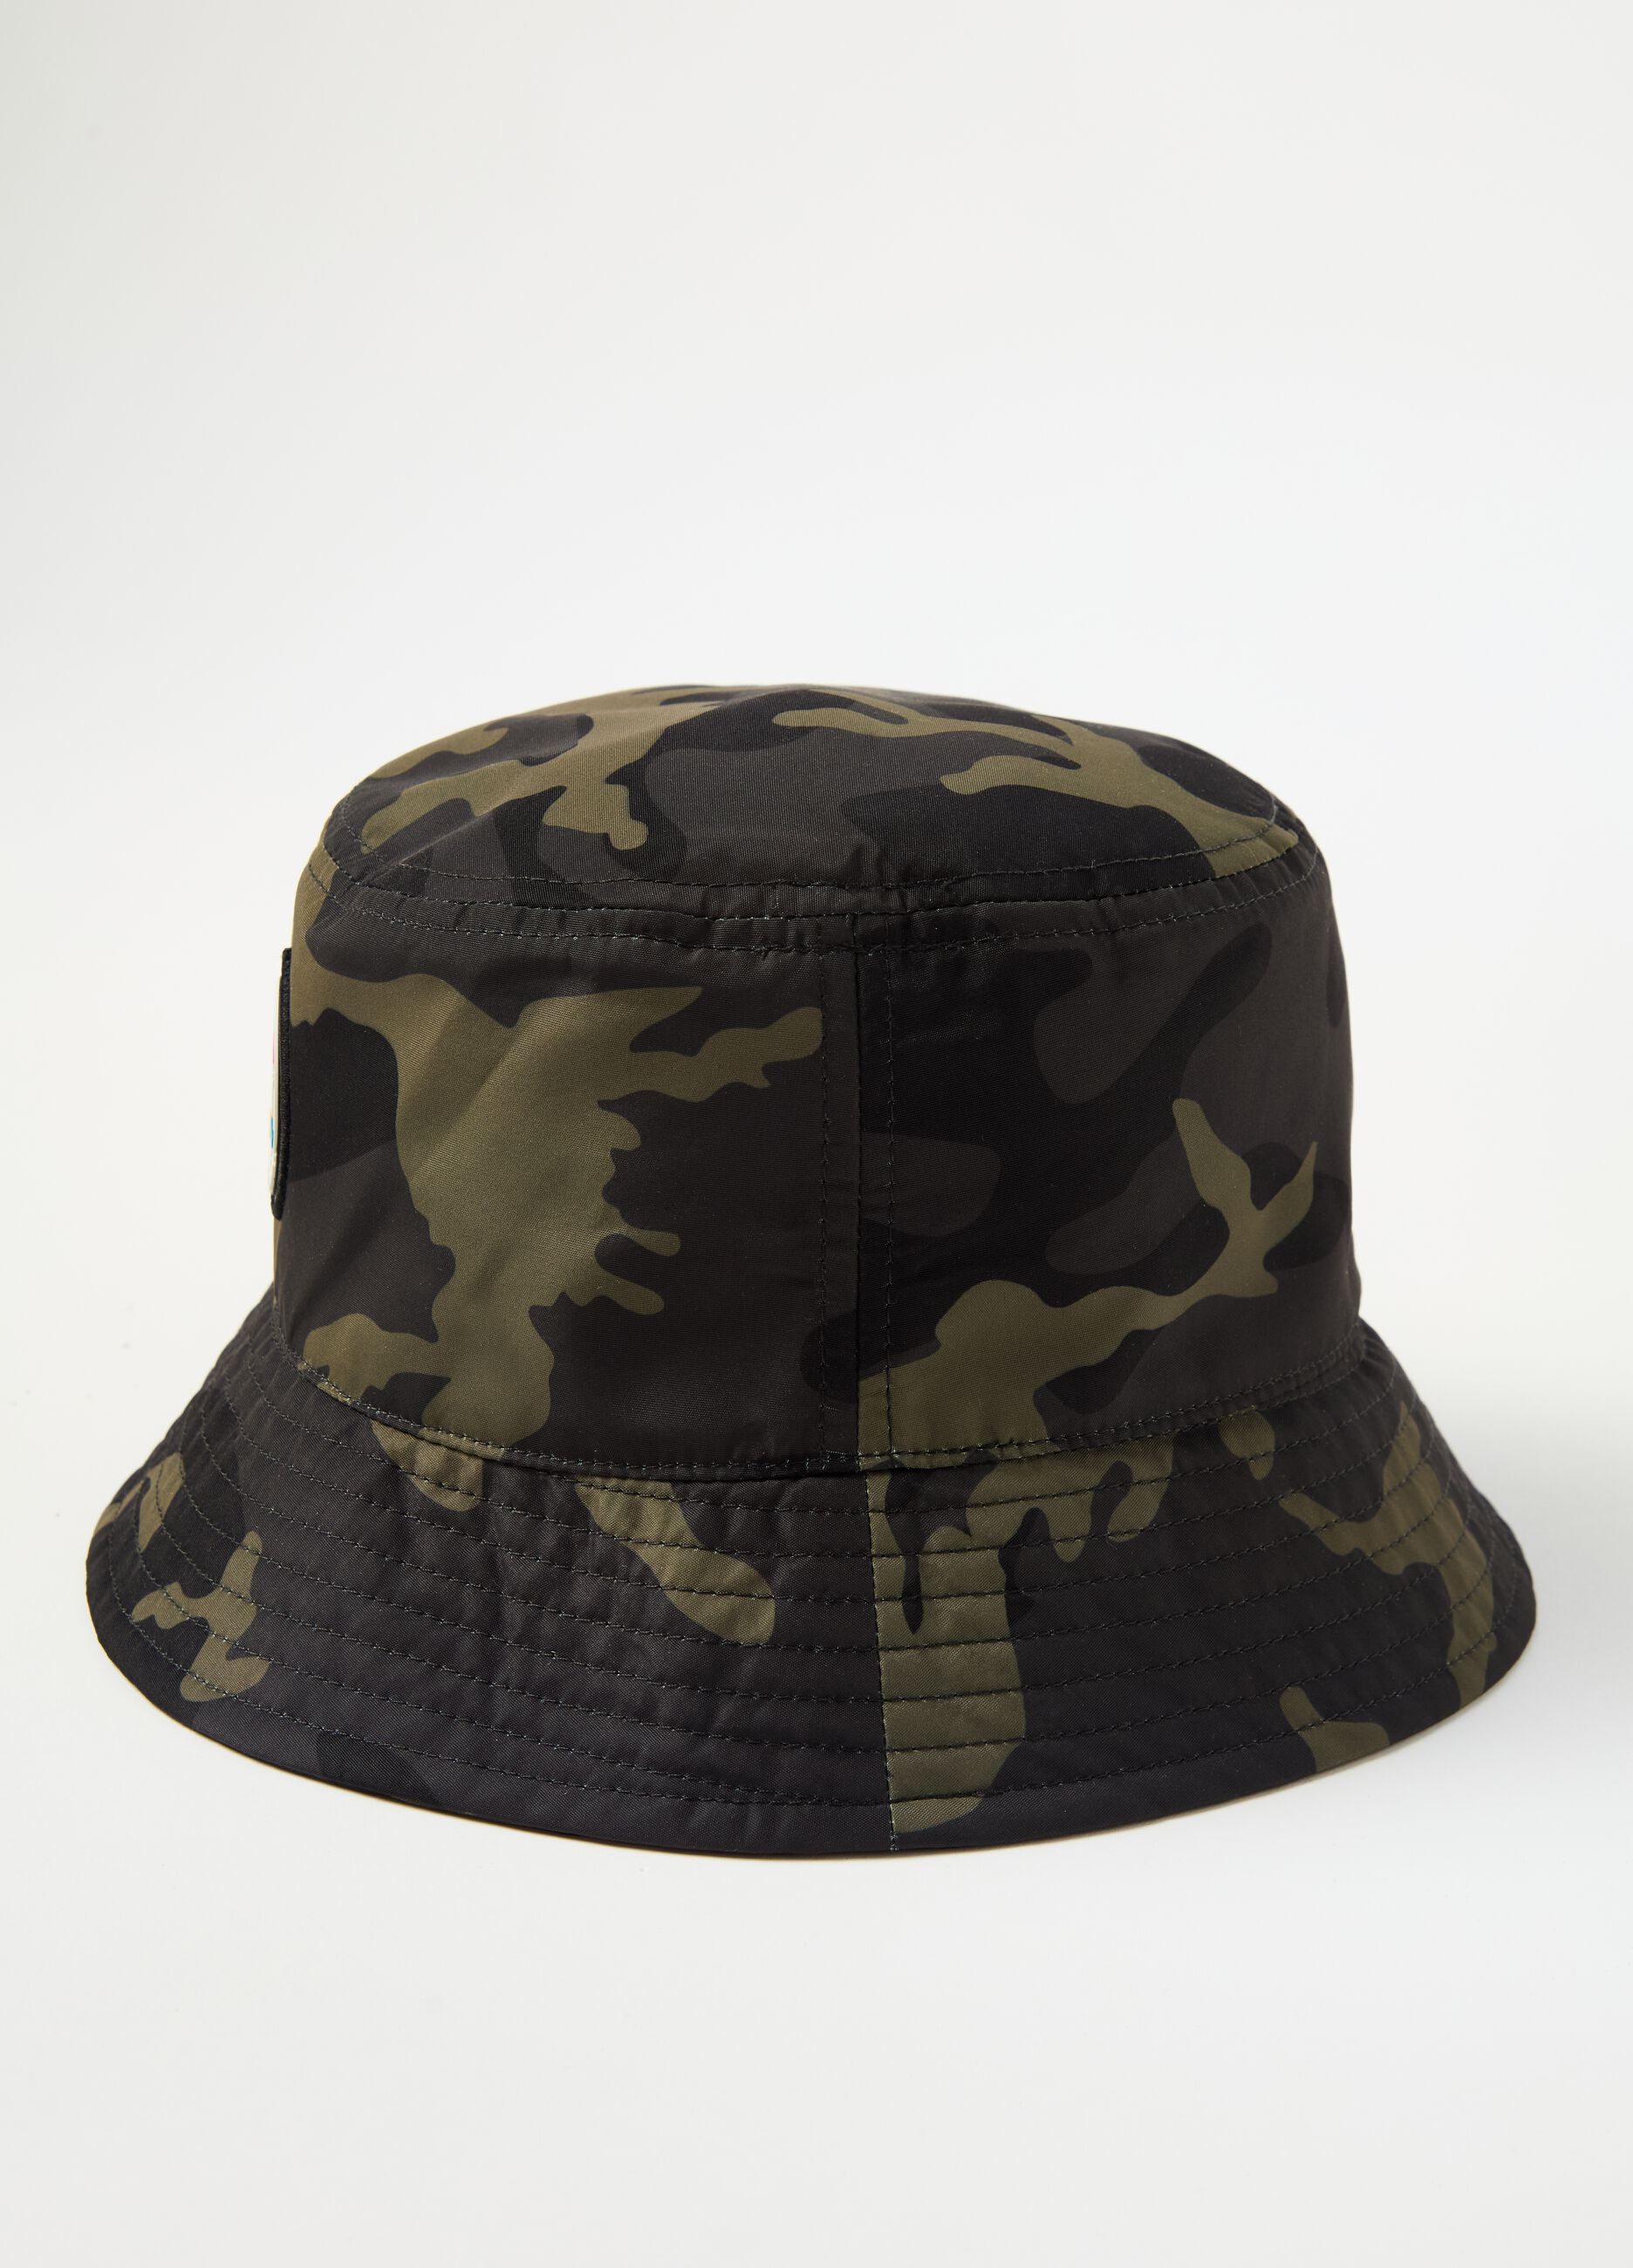 Camouflage fishing hat